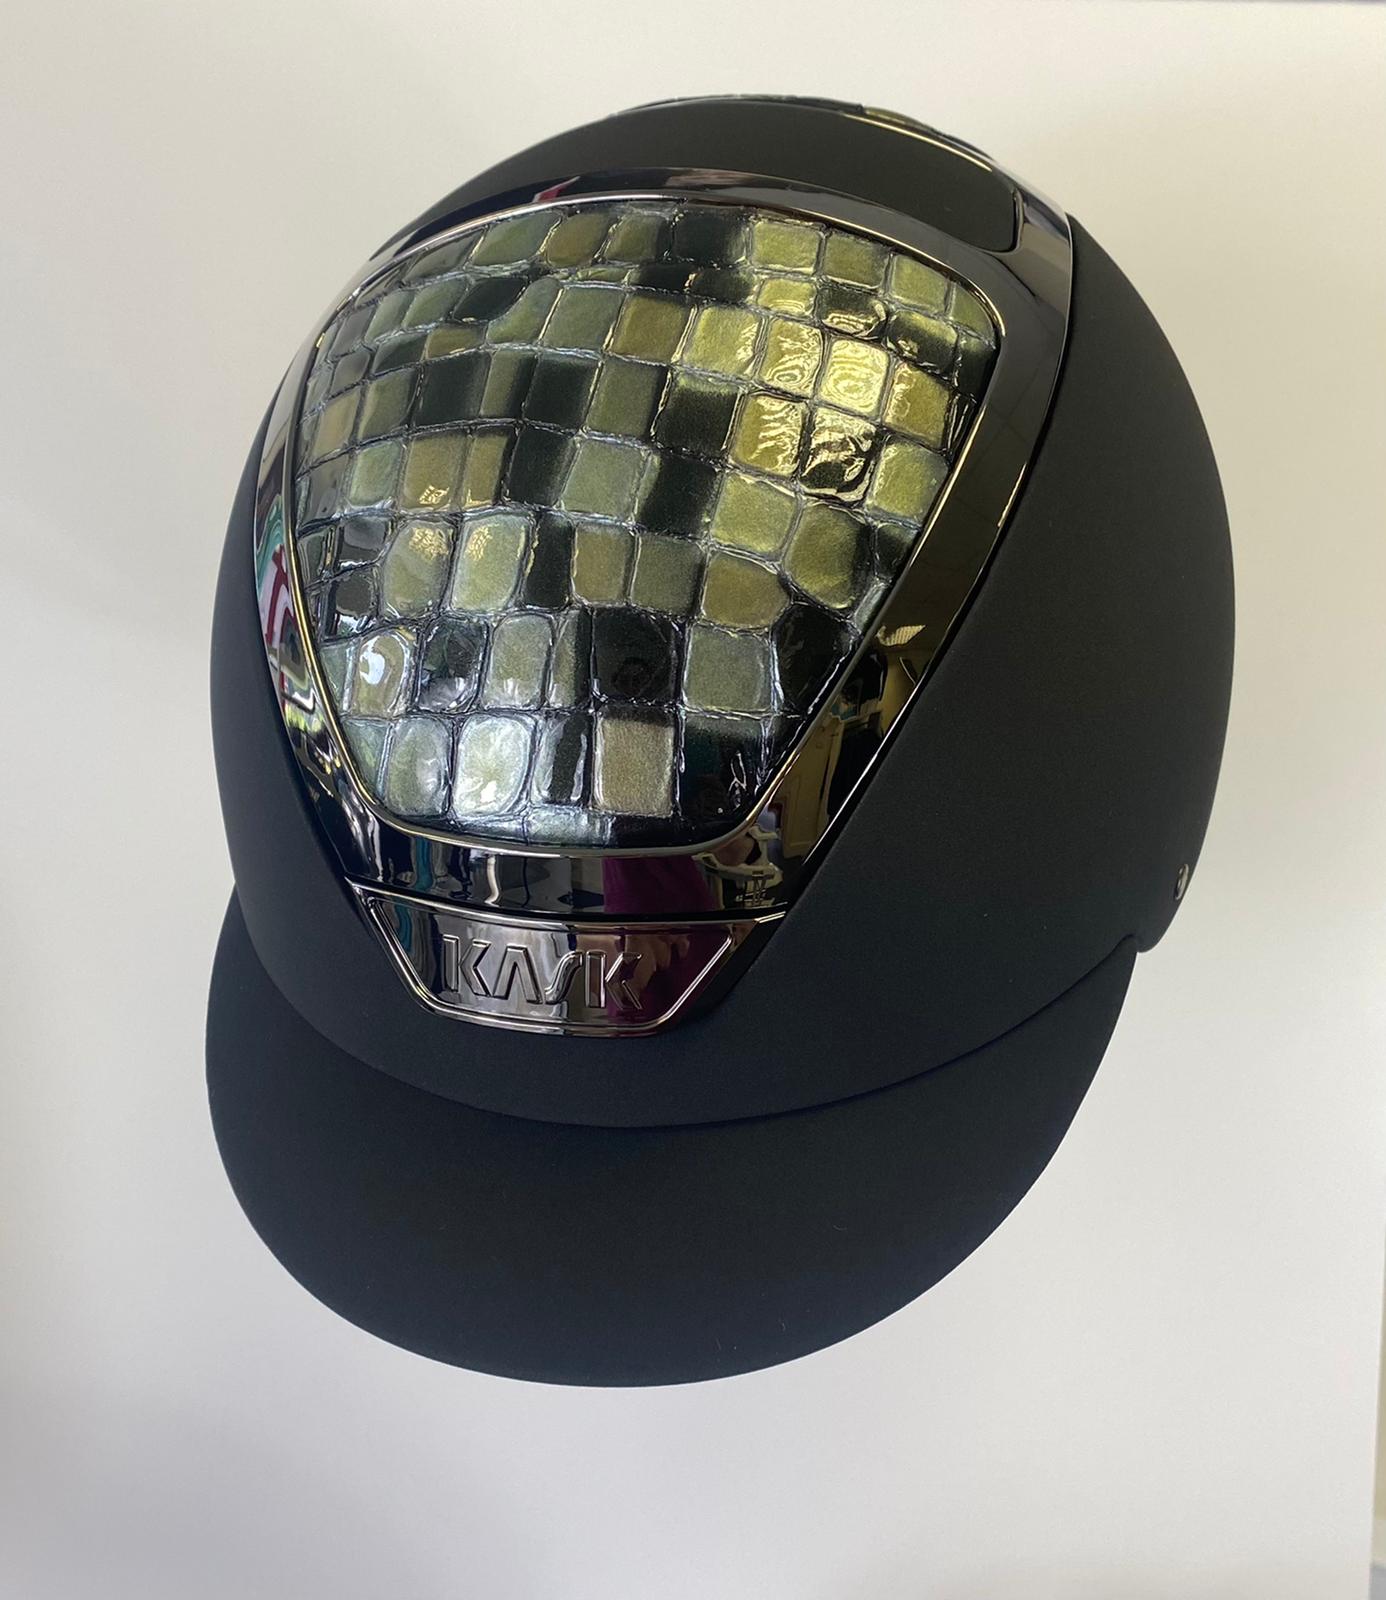 Kask Helmet, Black Matt with Equiclass Silver Leather Aerator